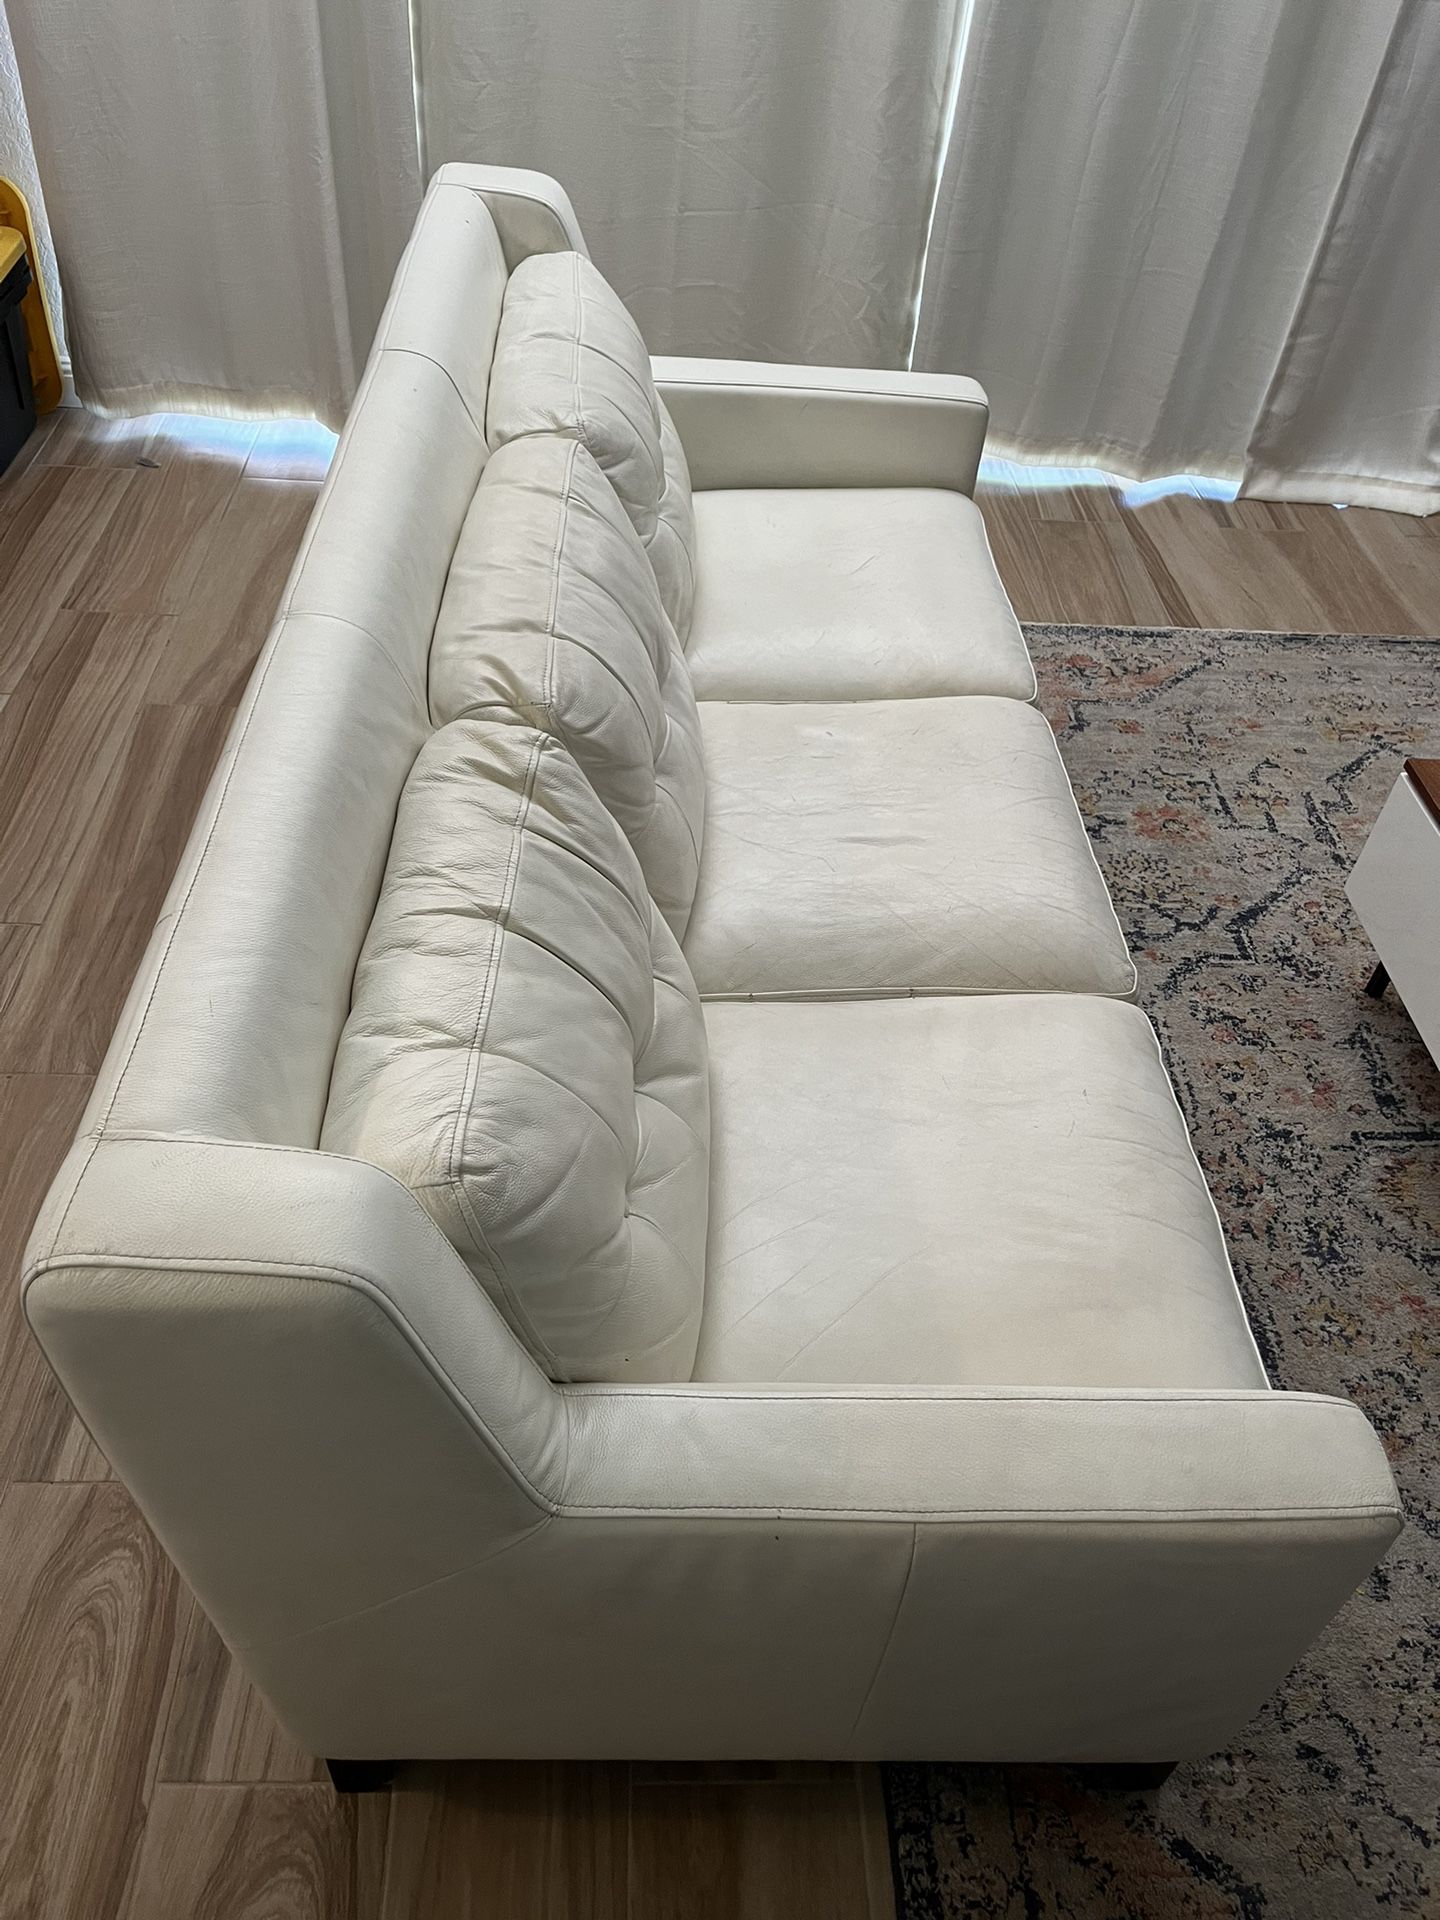 White Leather Sofa 